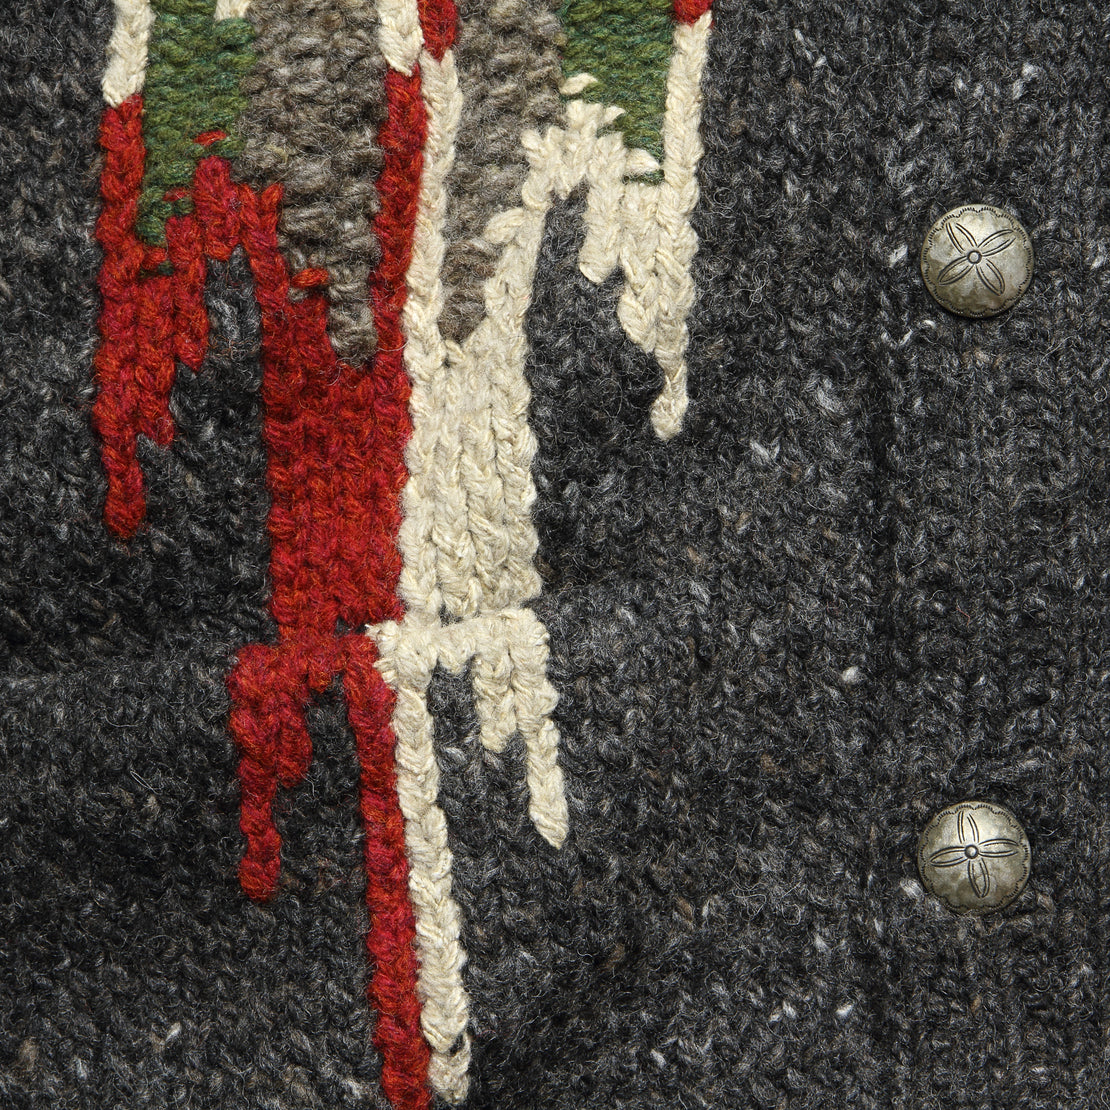 Hand-Knit Wool-Silk Cardigan - Black Multi - RRL - STAG Provisions - Tops - Sweater